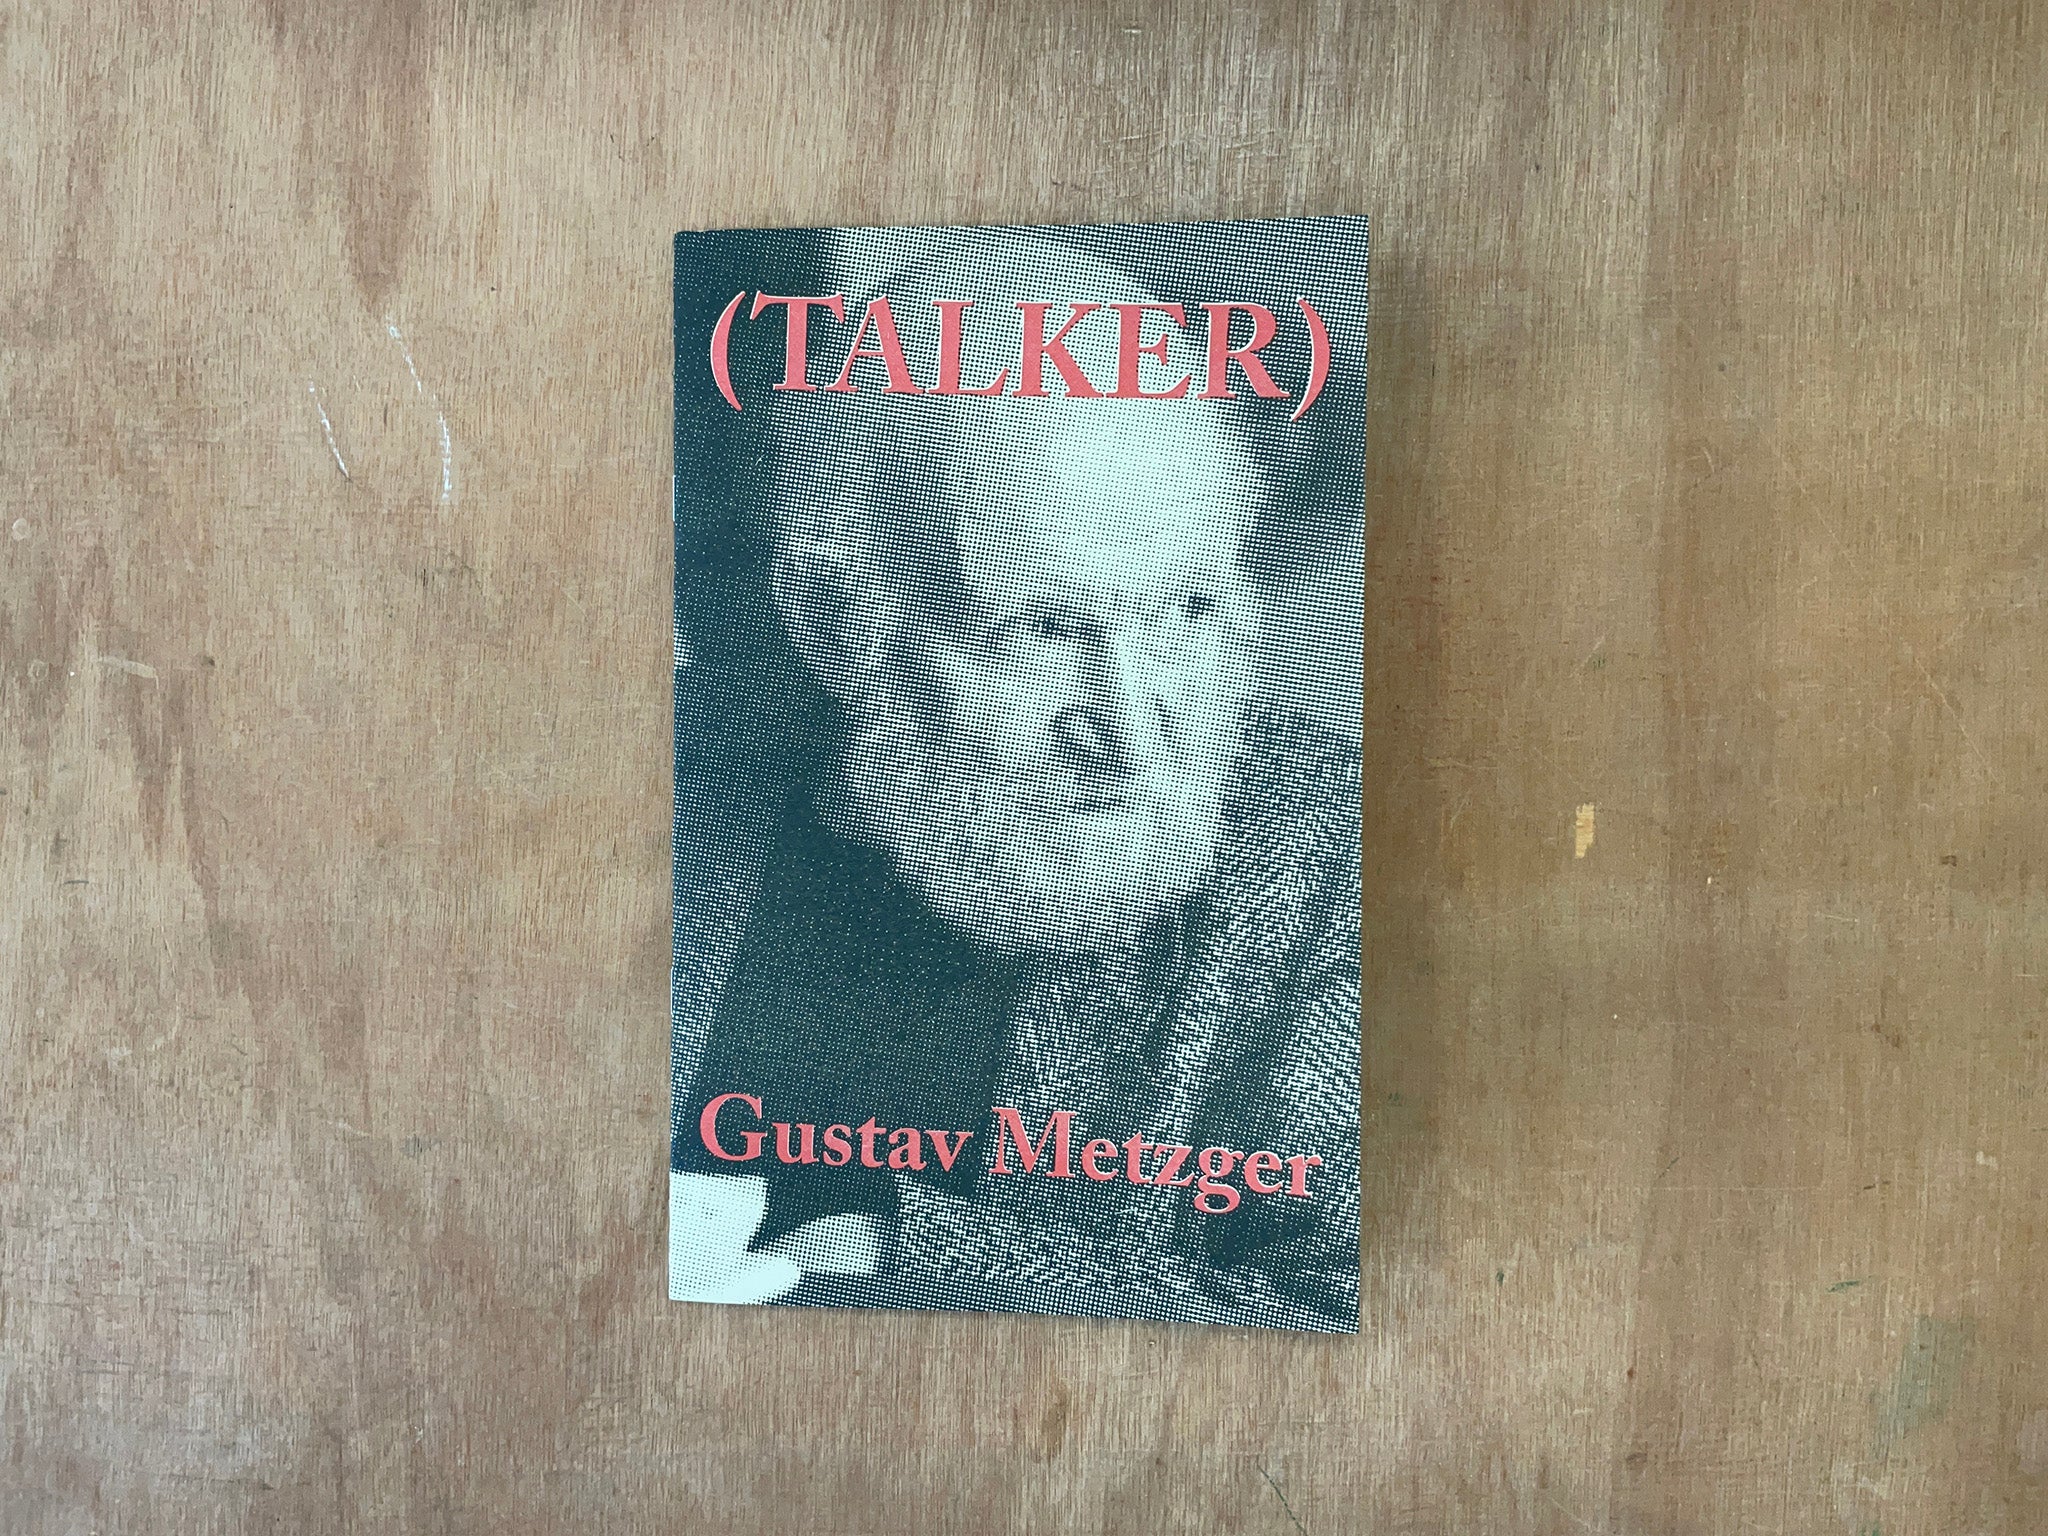 (TALKER): GUSTAV METZGER by Giles Bailey